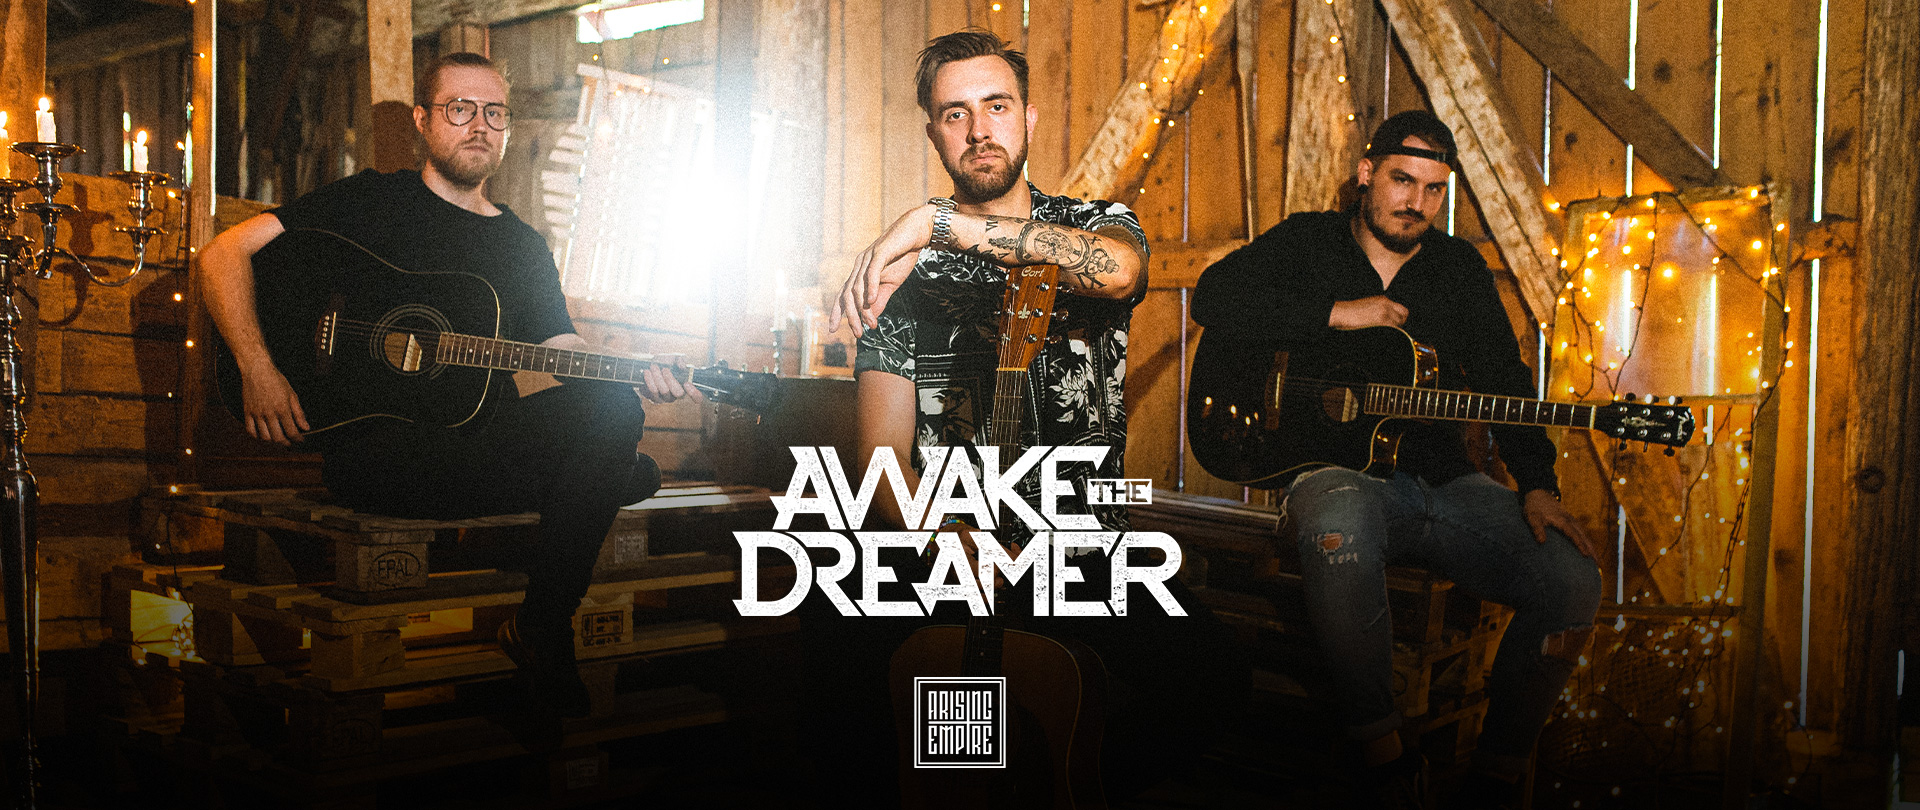 Awake The Dreamer at Arising Empire • Official Online Shop / EN